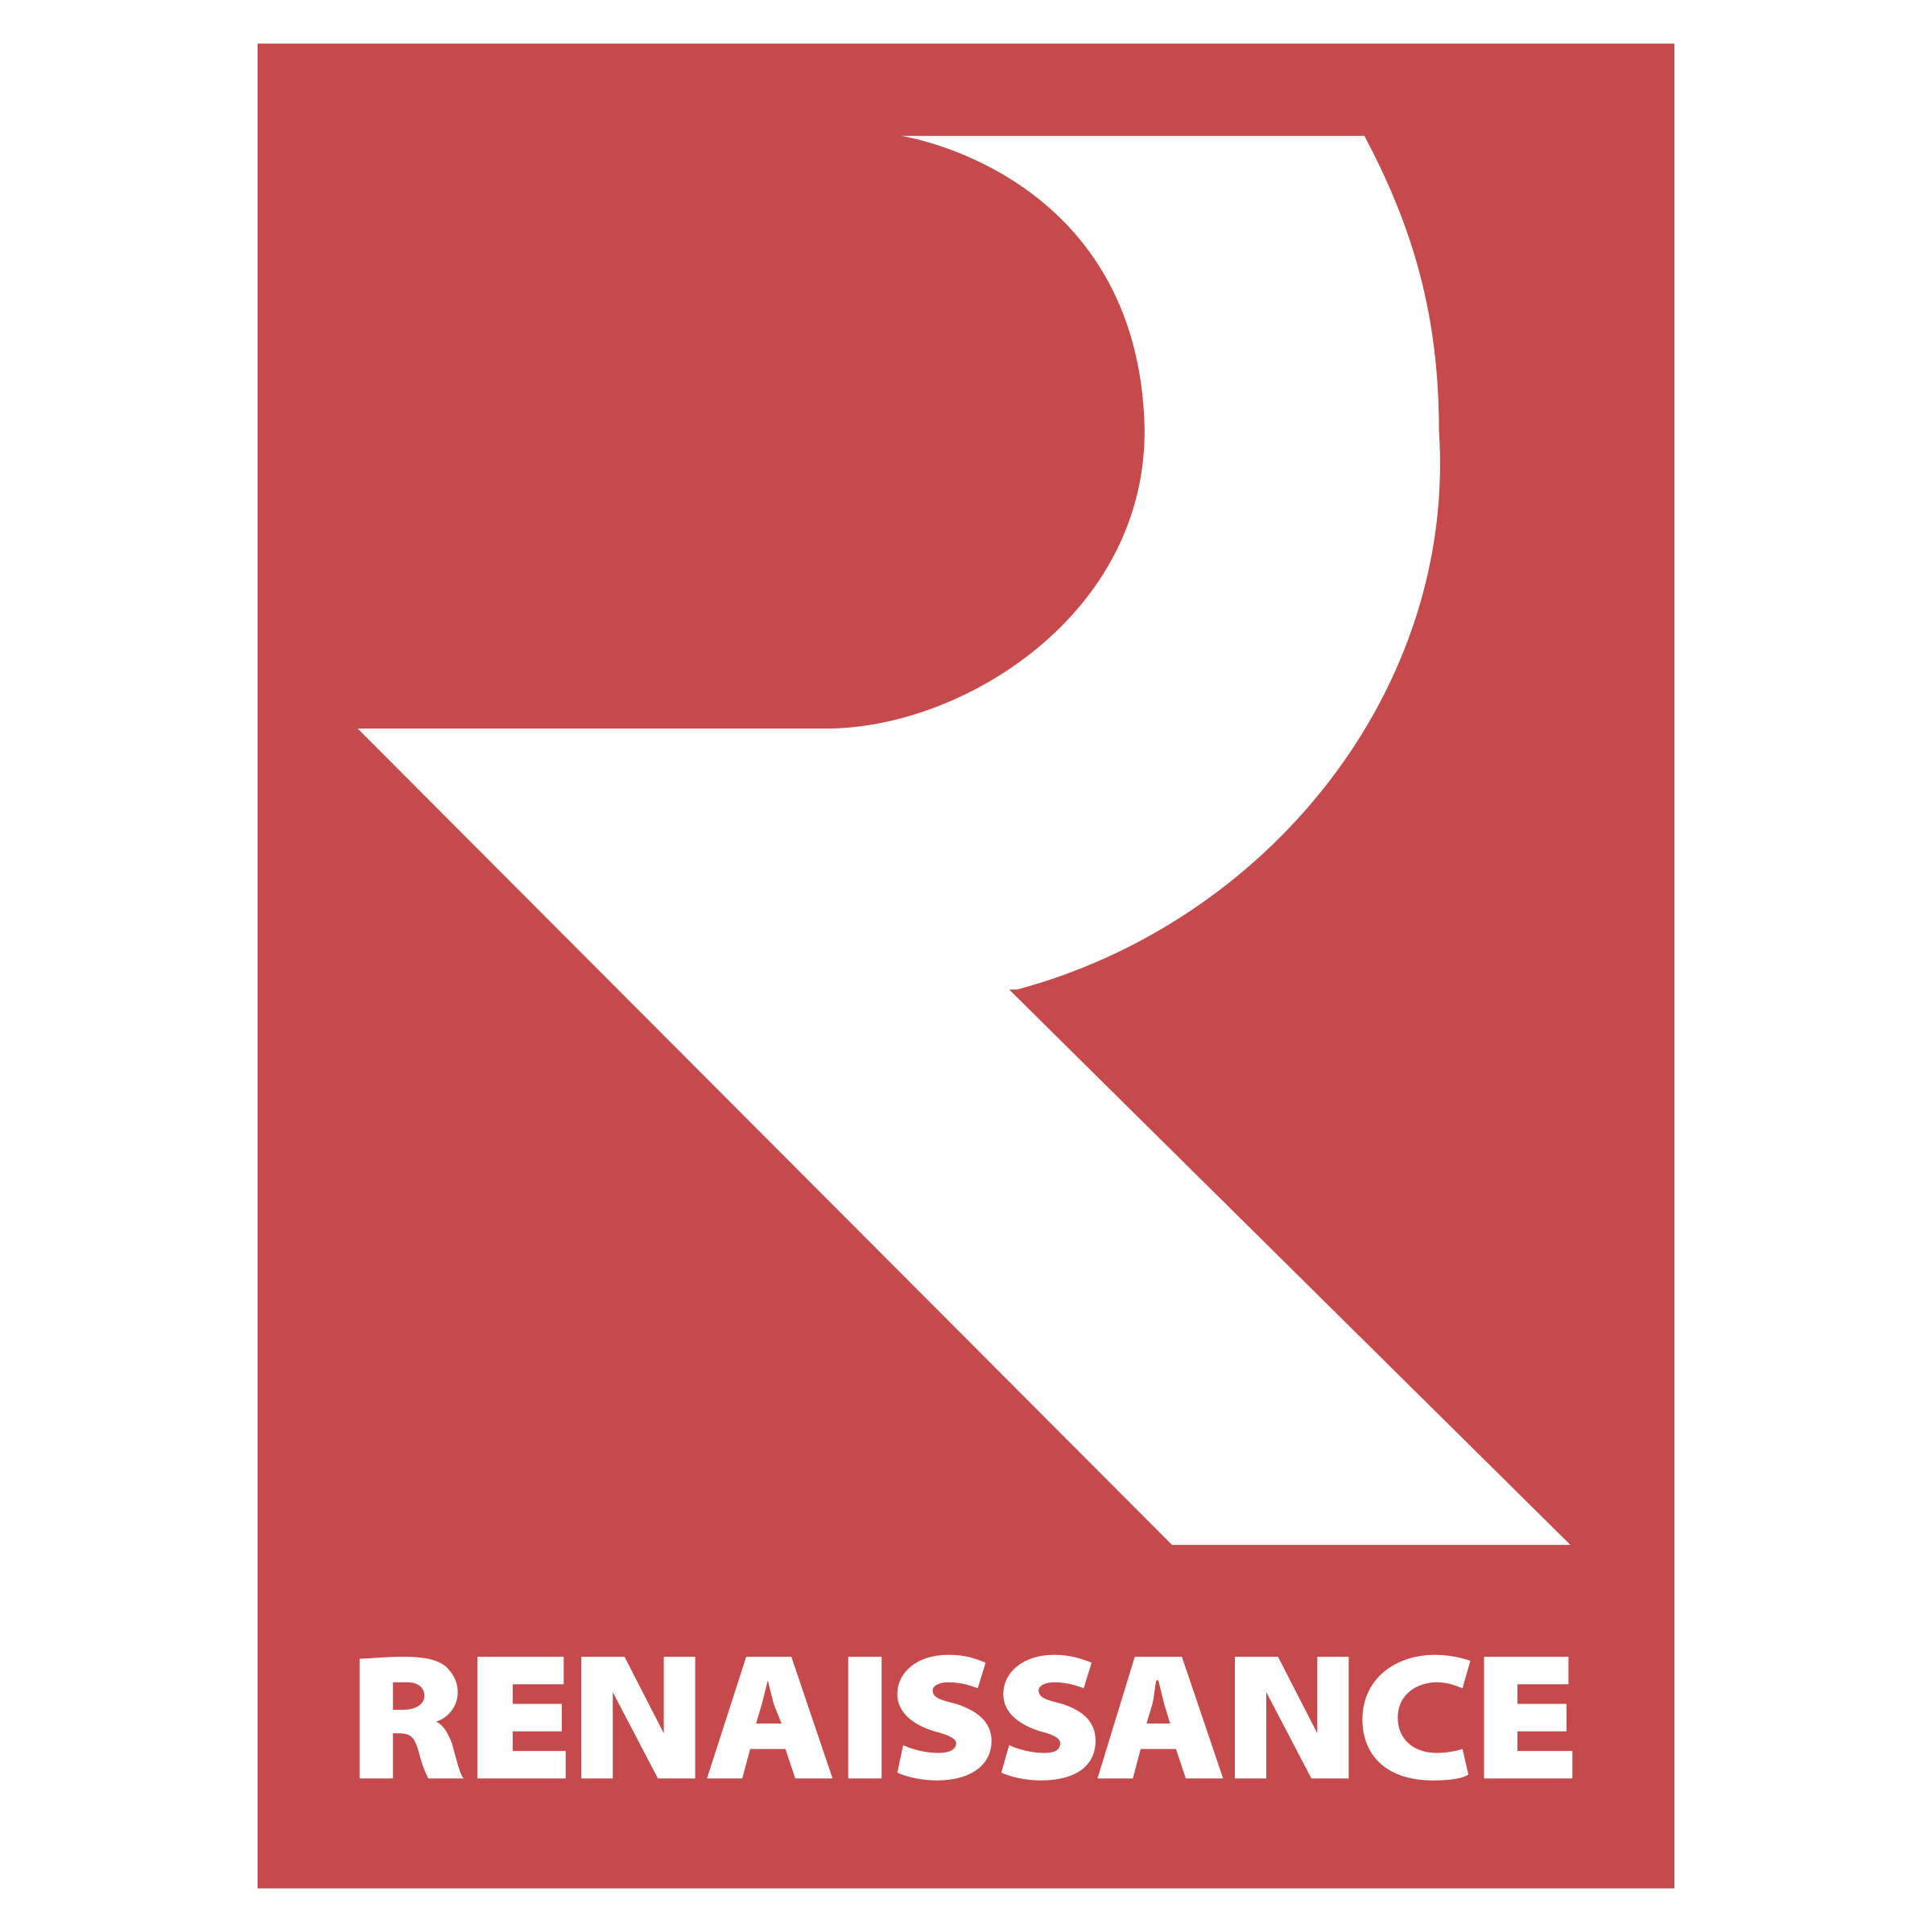 Renaissance Logo - Renaissance Logo PNG Transparent & SVG Vector - Freebie Supply